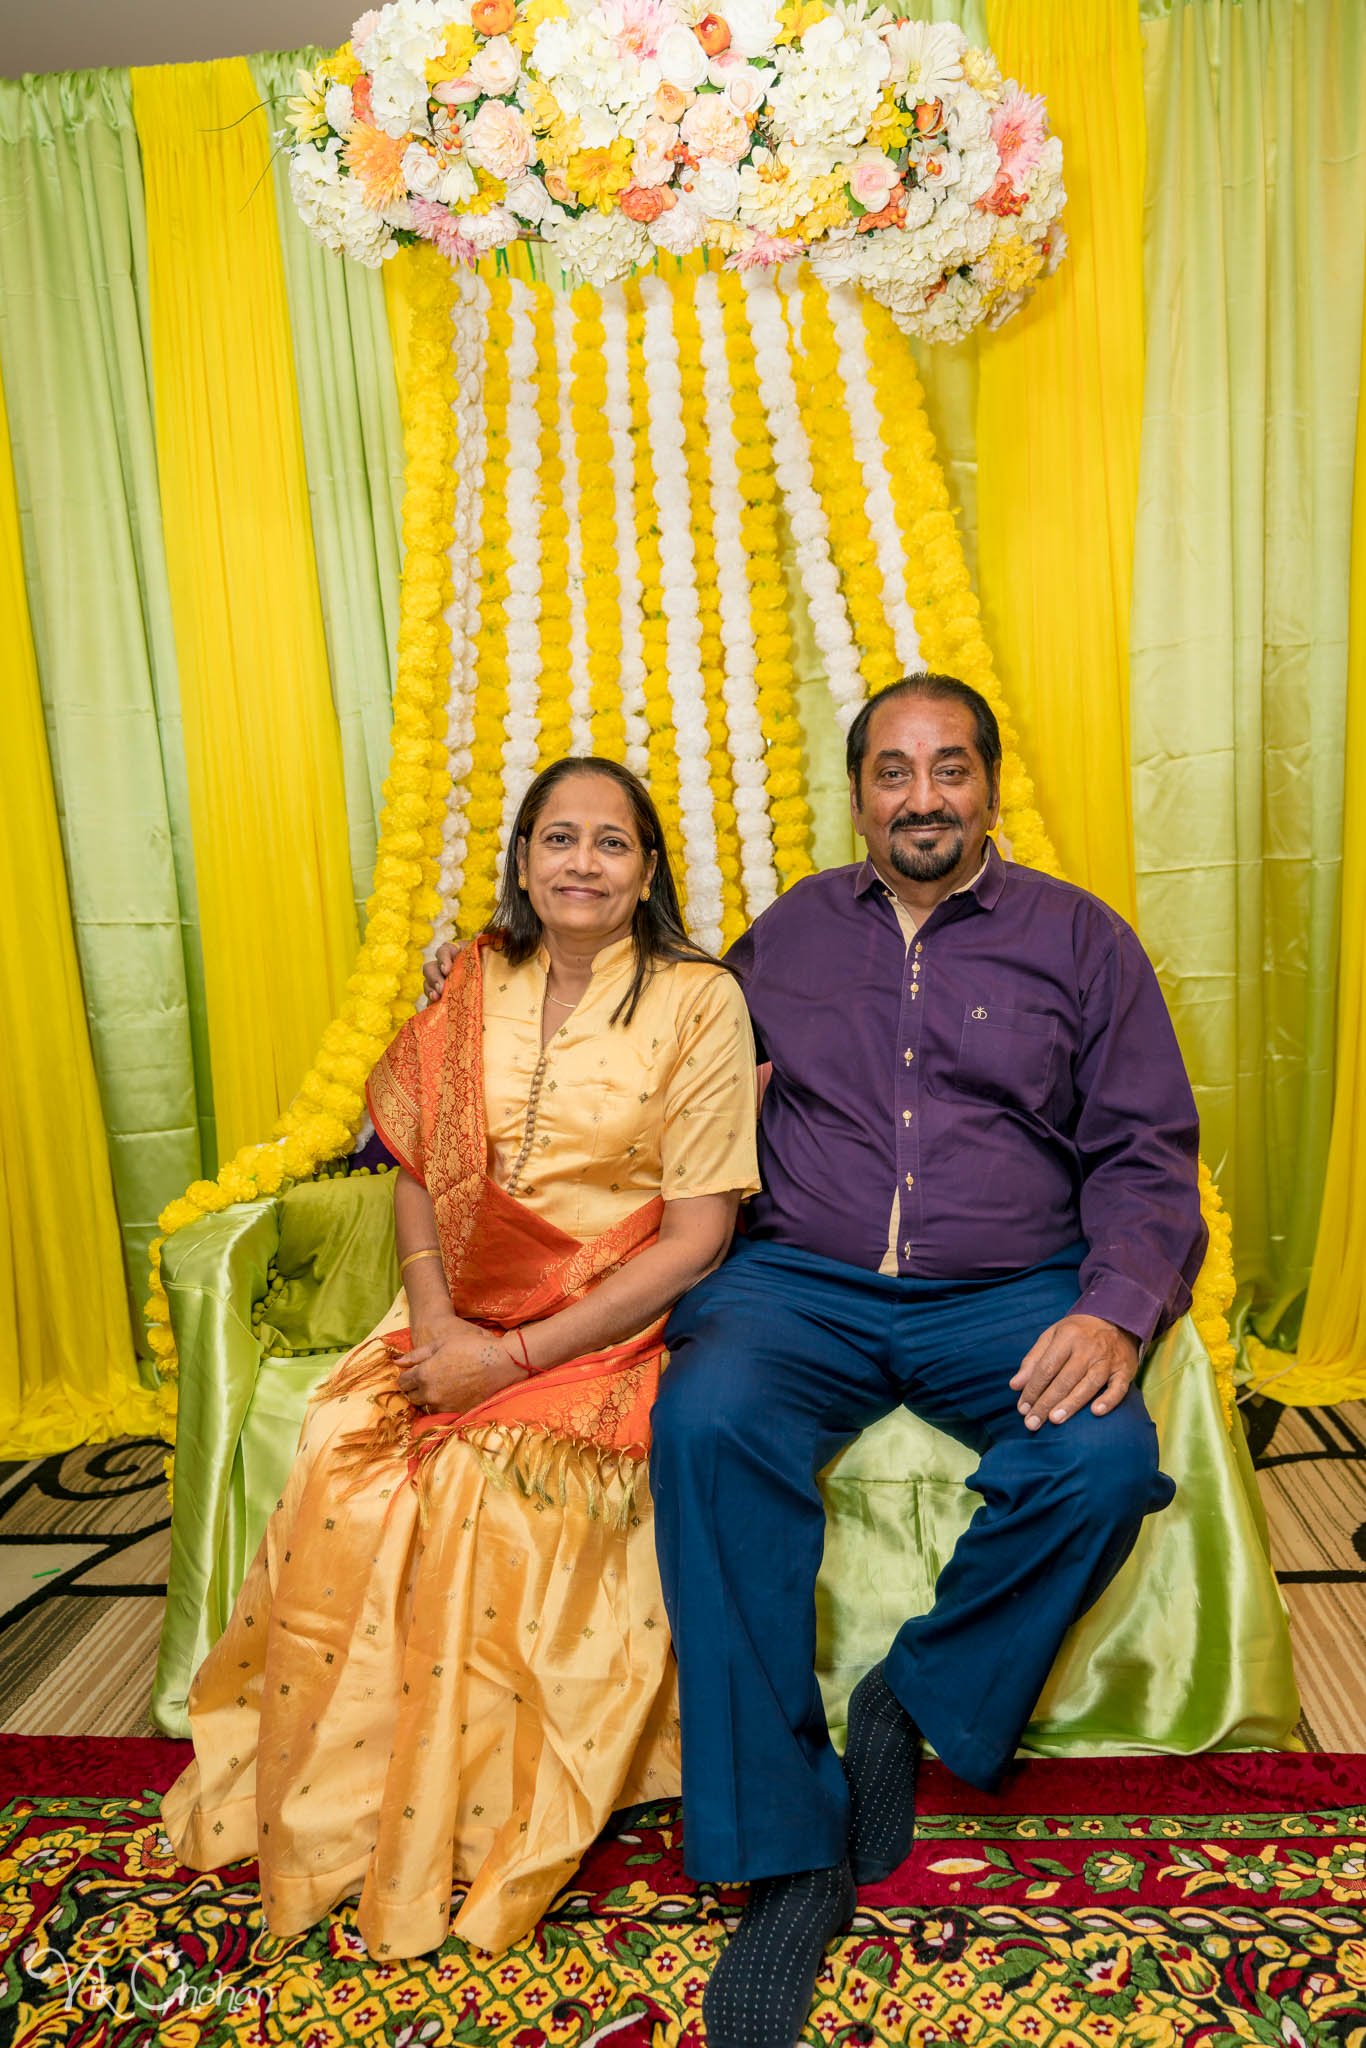 2022-02-03-Hely-&-Parth-Mendi-Indian-Wedding-Vik-Chohan-Photography-Photo-Booth-Social-Media-VCP-201.jpg